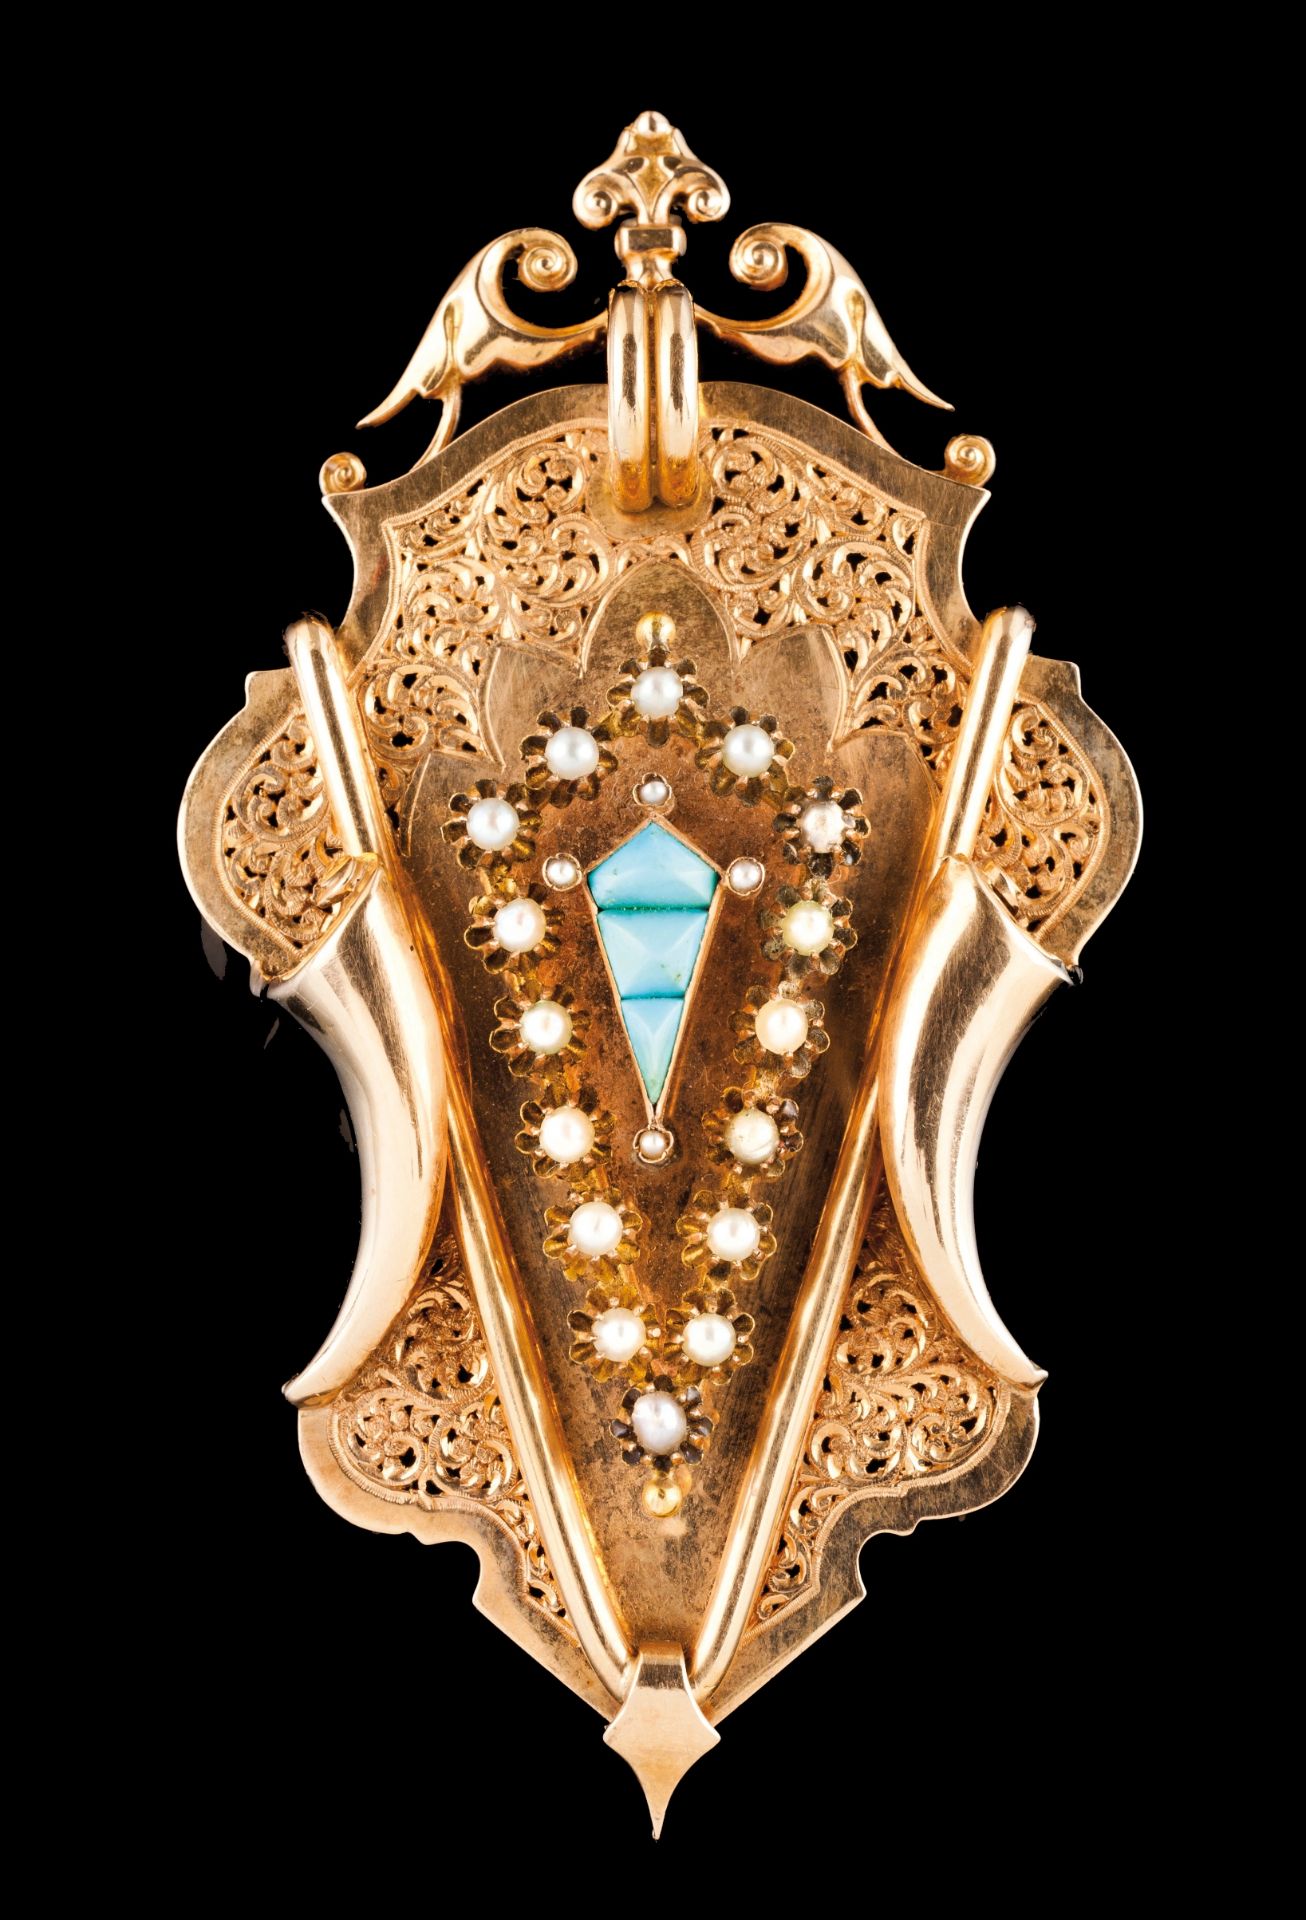 A reliquary pendant/brooch